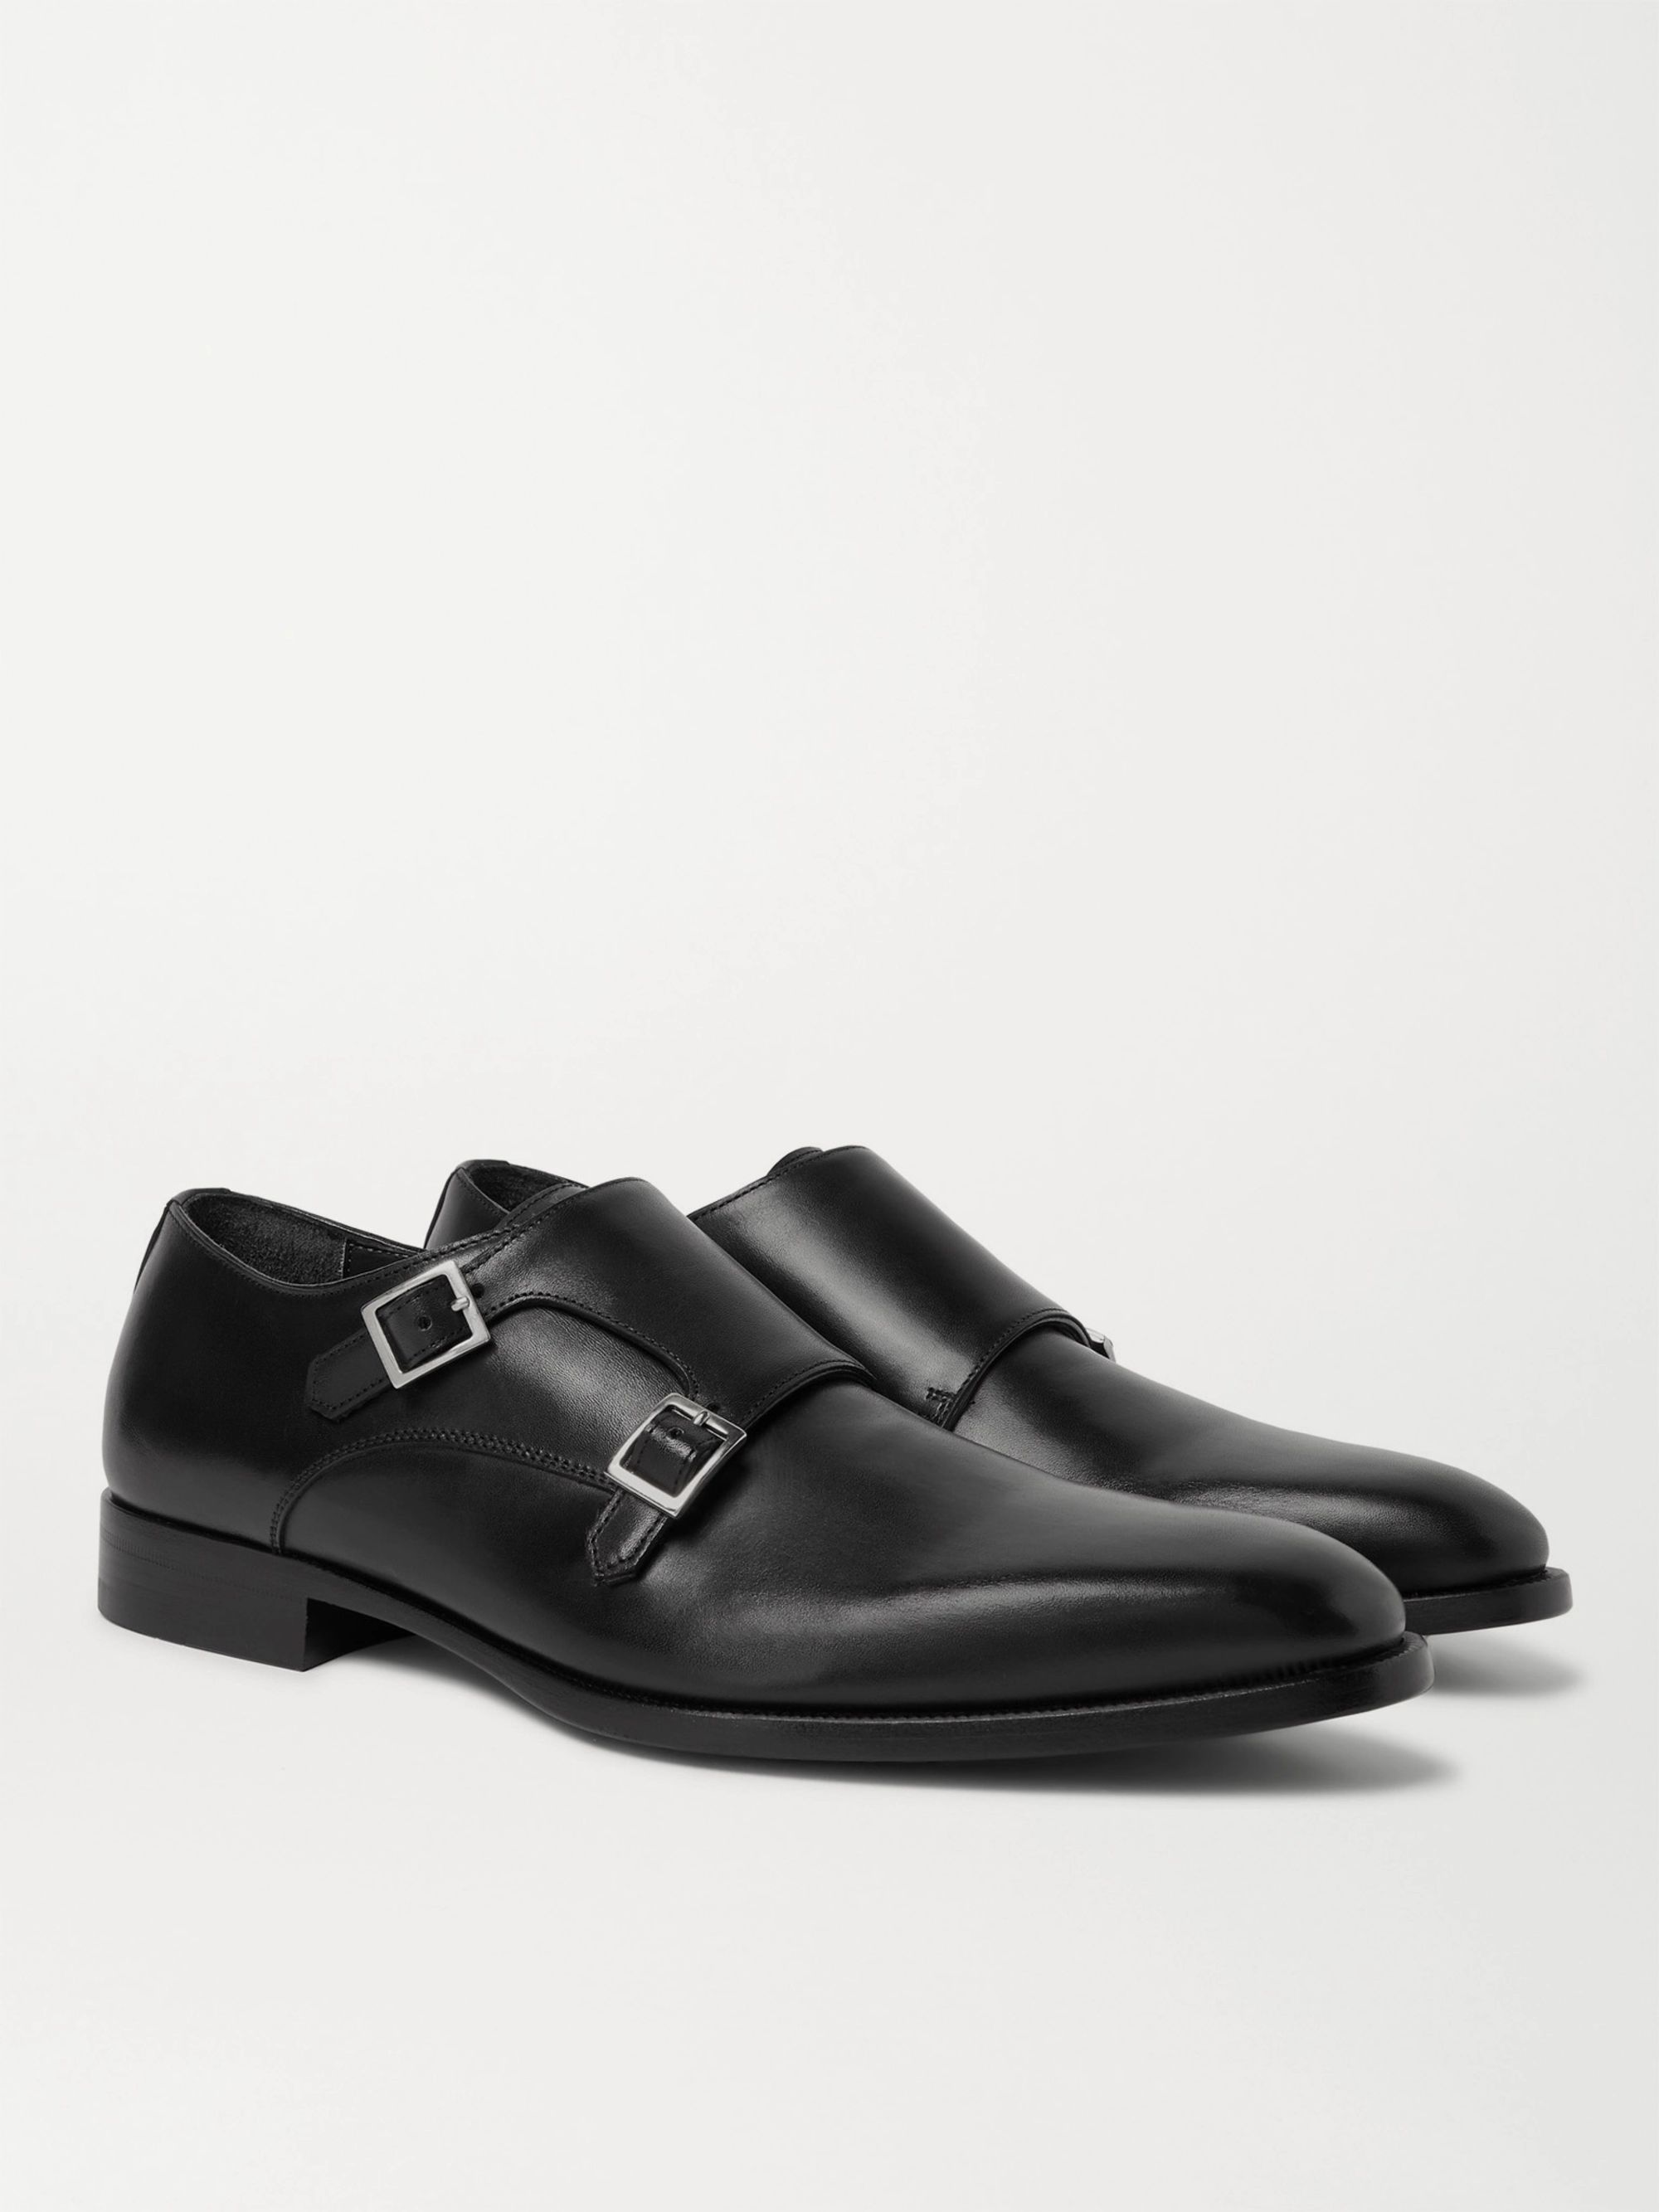 Black Leather Monk-Strap Shoes 